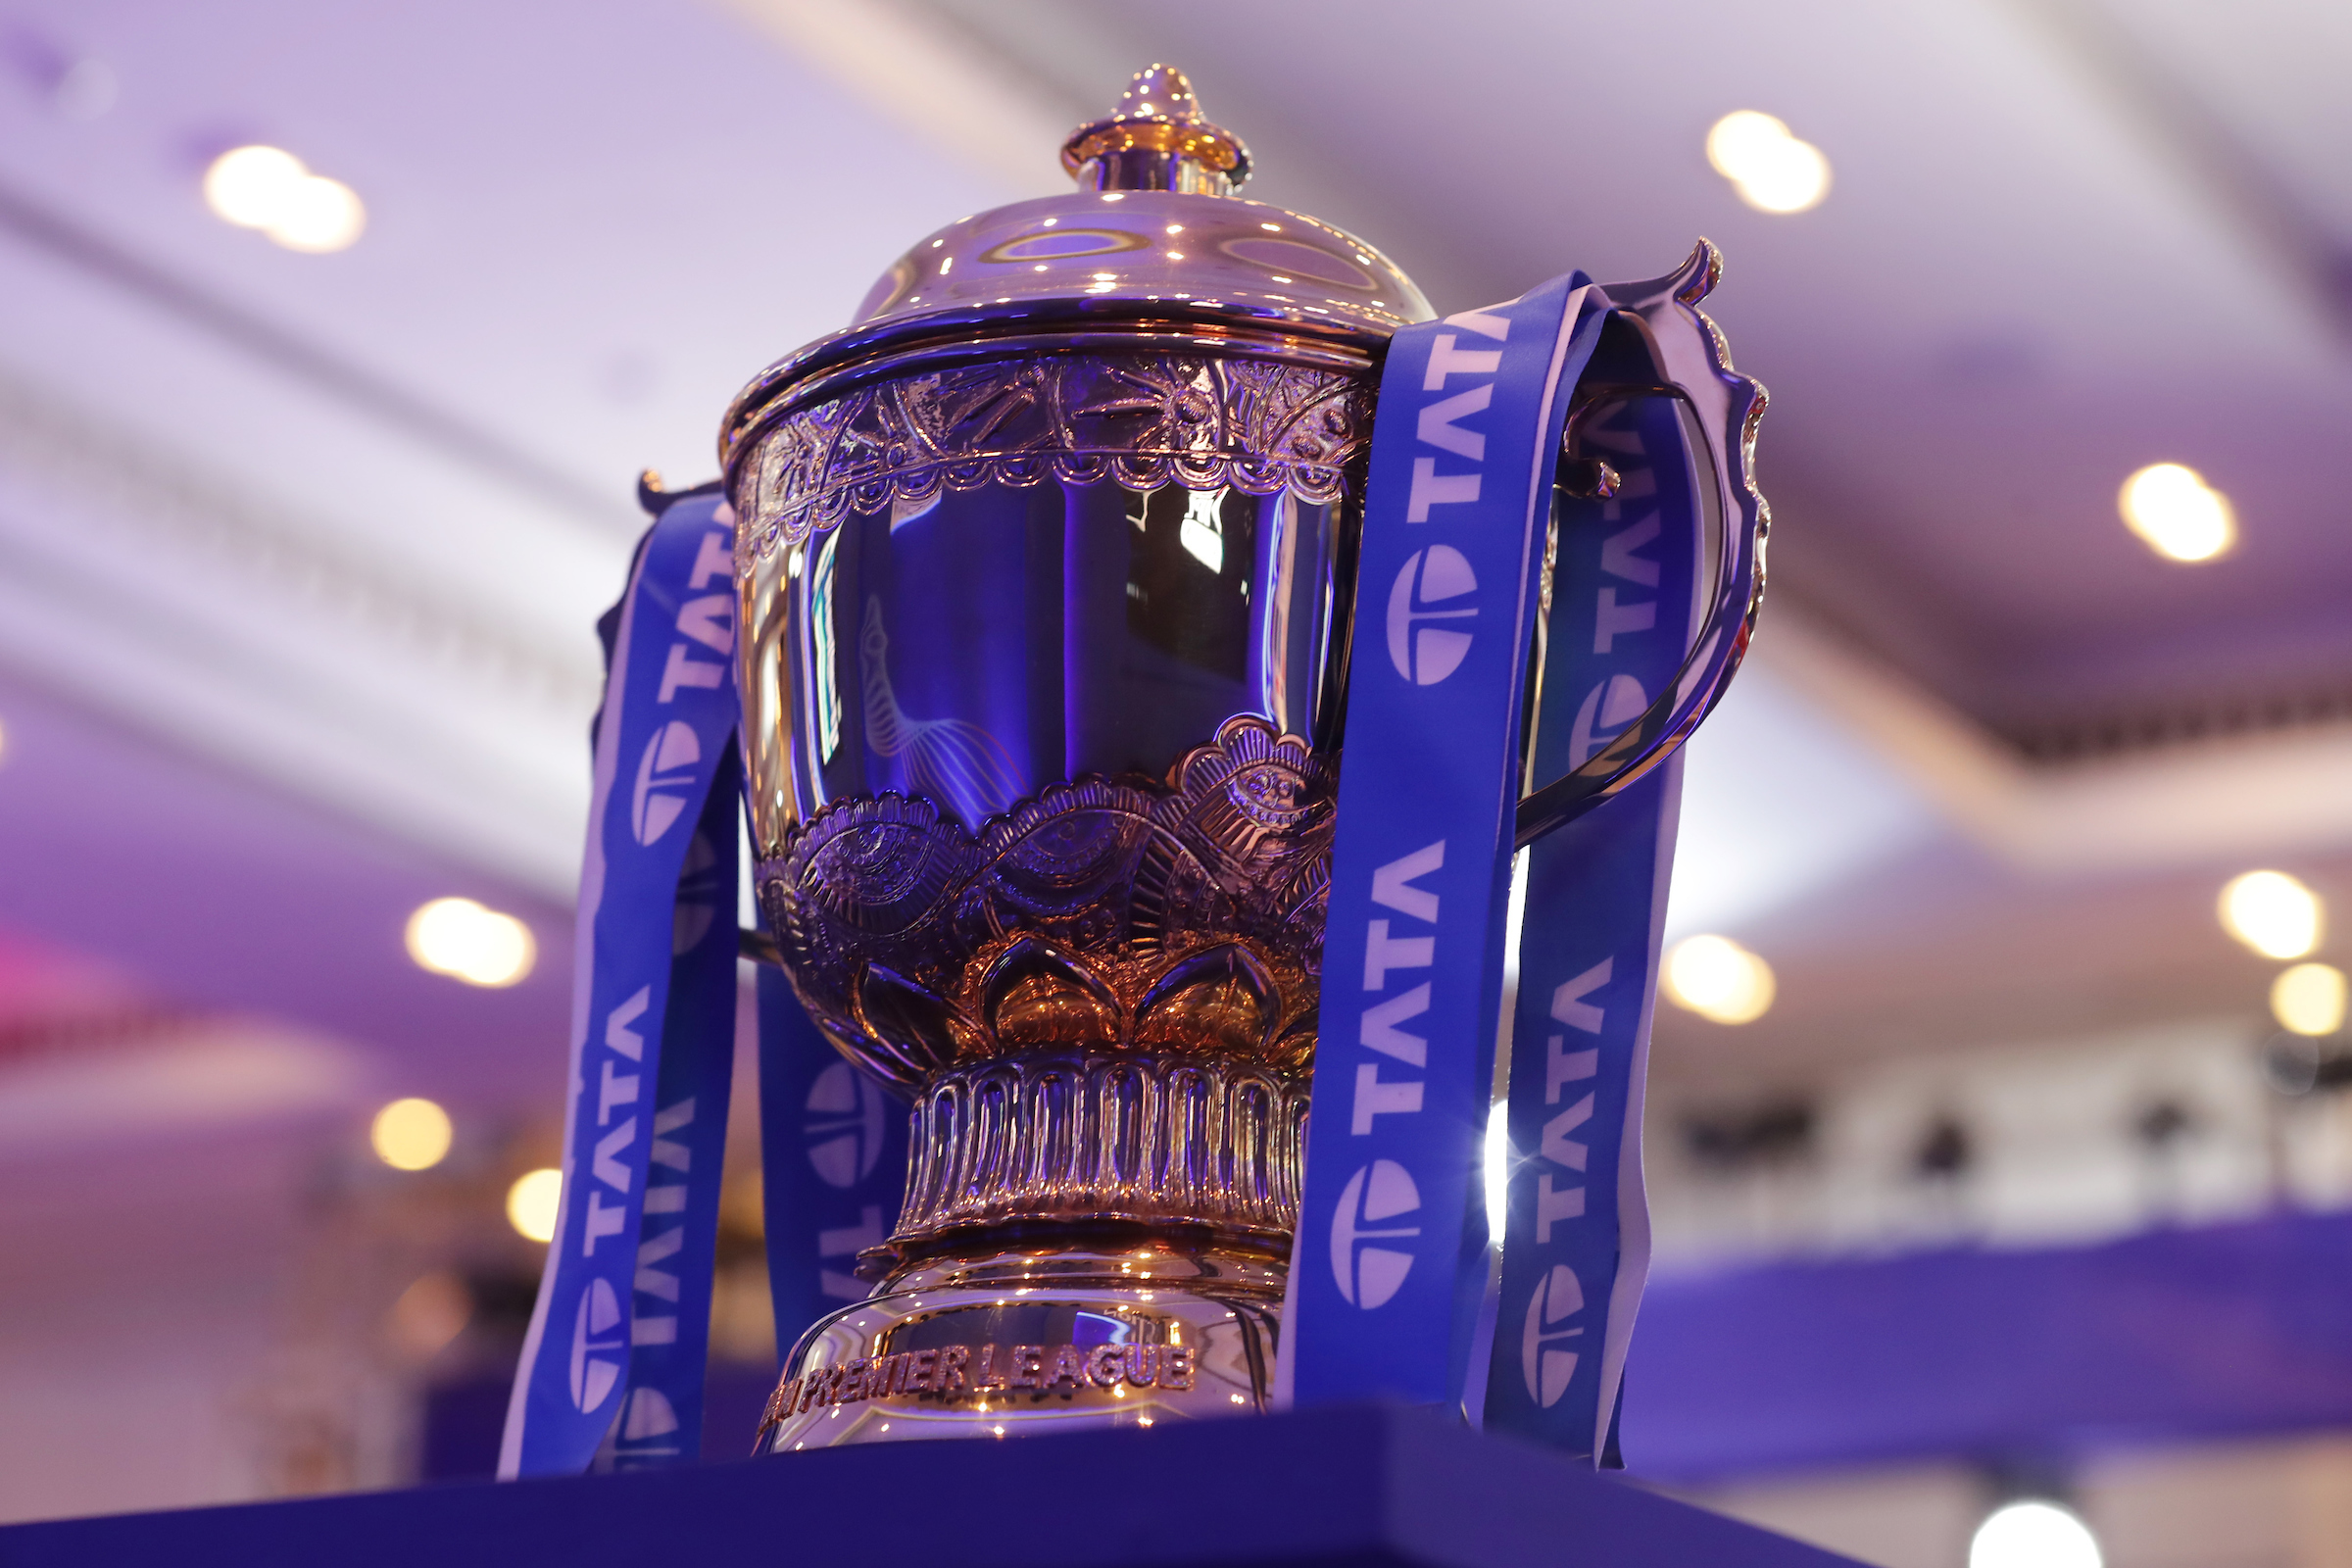 IPL 2022: Ravi Shastri & Suresh Raina To Commentate During The Tournament – Reports - Cricket Addictor